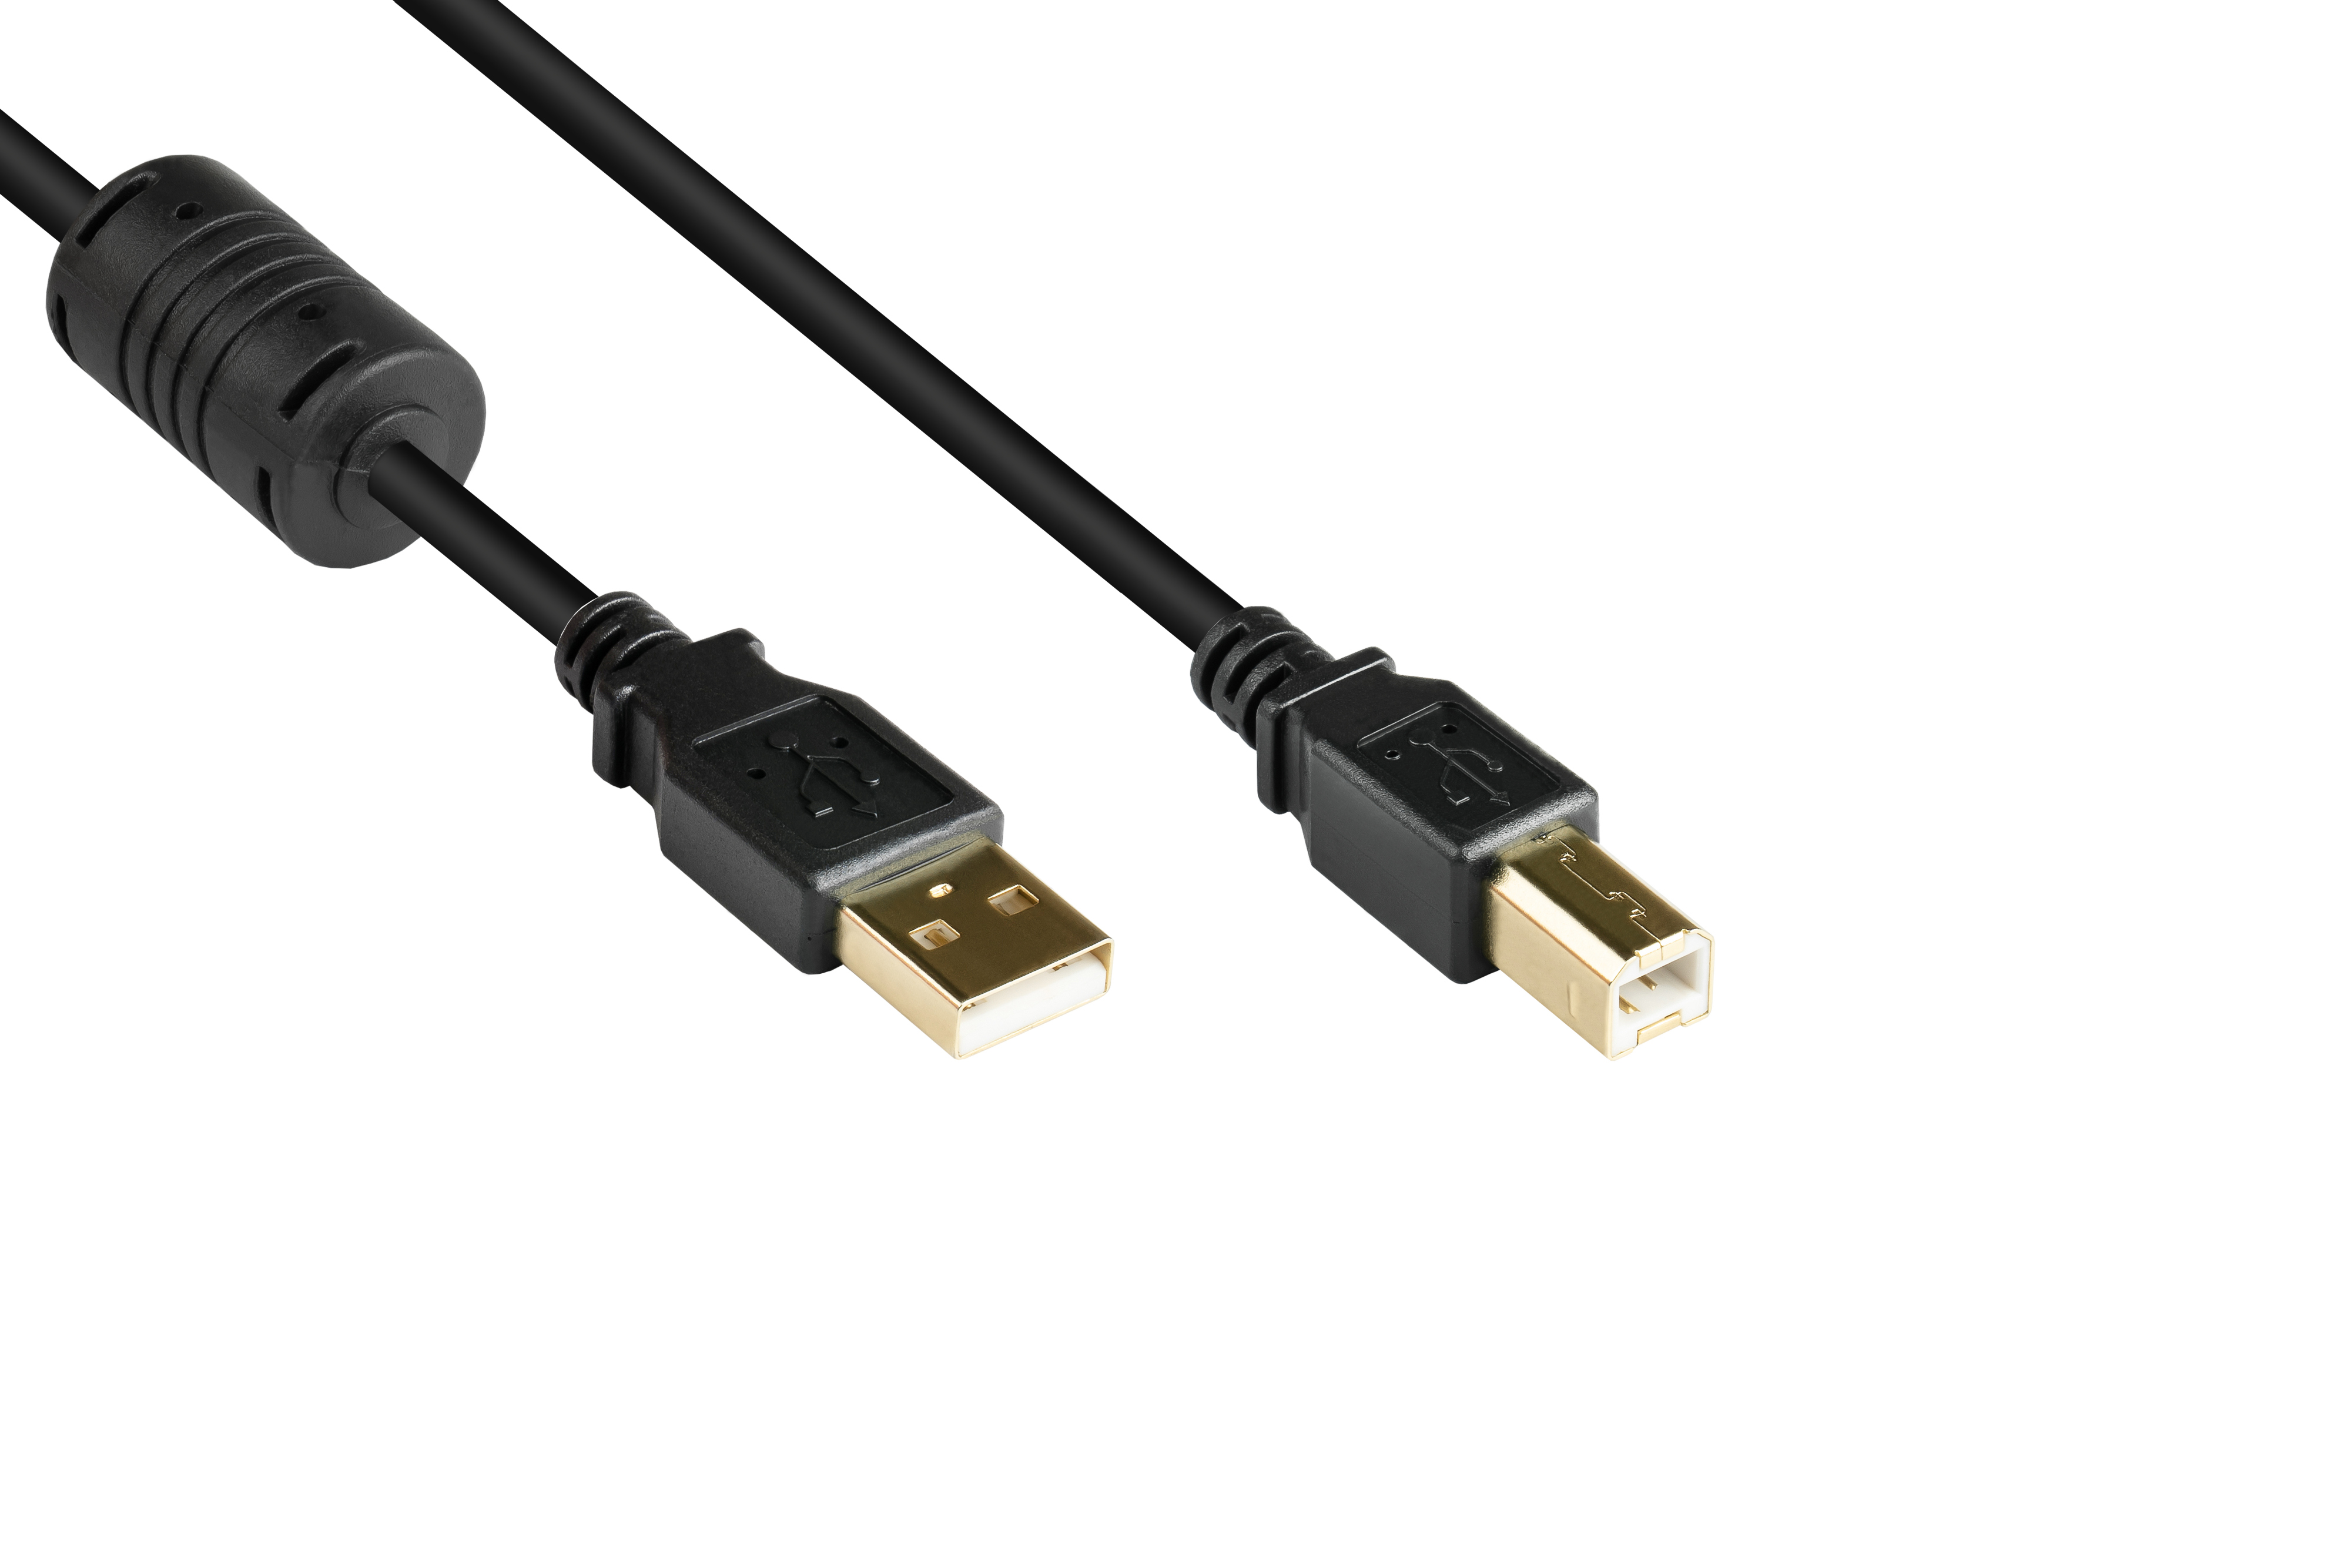 B, vergoldet, A mit schwarz Ferritkern, an Stecker USB 2.0 Anschlusskabel KABELMEISTER Stecker